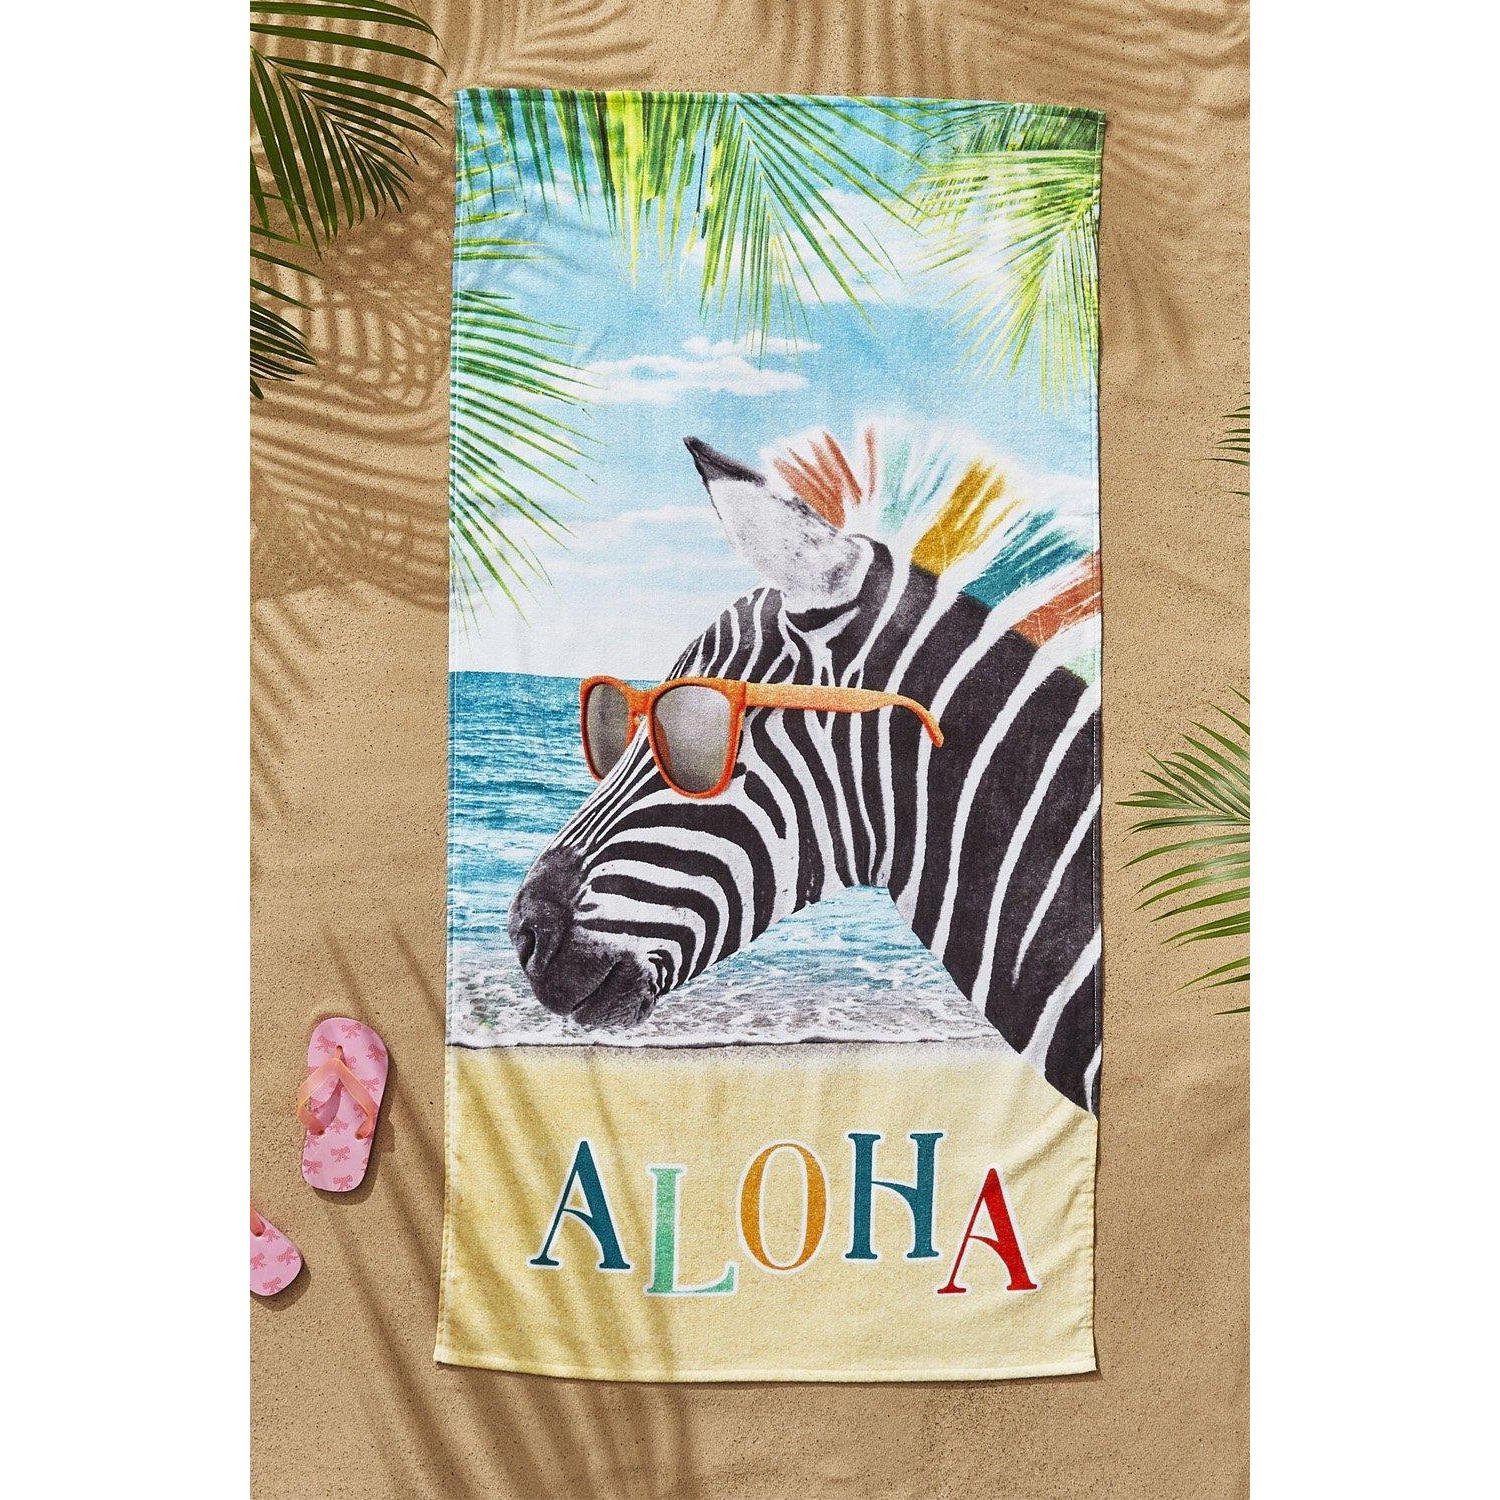 'Aloha Zebra' Beach Towel - image 1